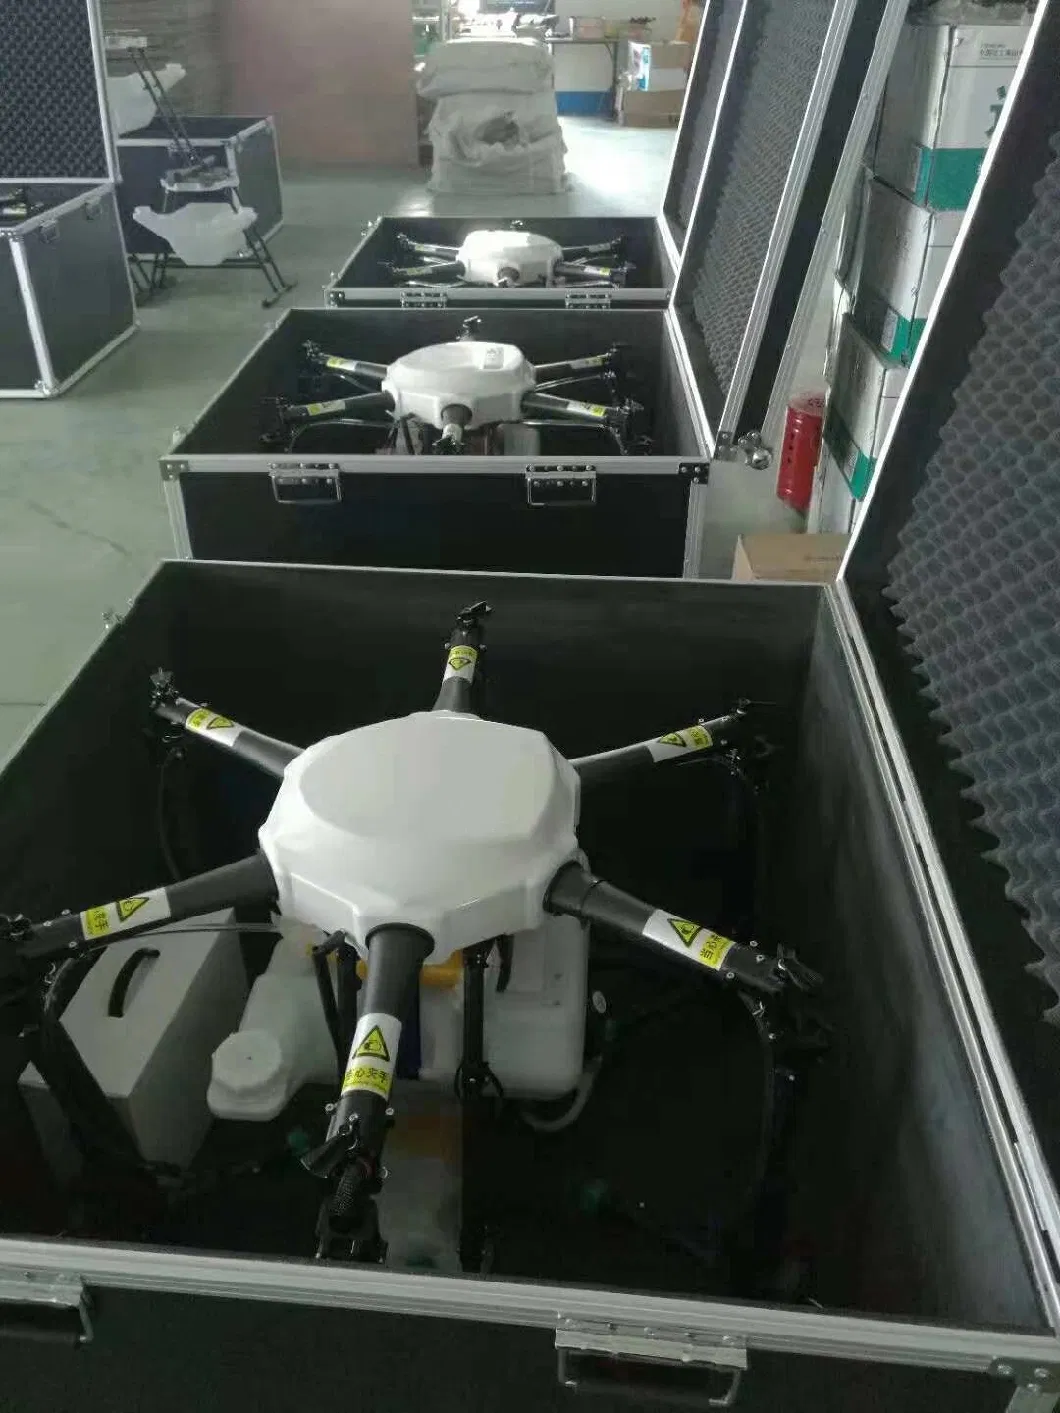 Agricultural Drone Sprayer Pesticide Drones